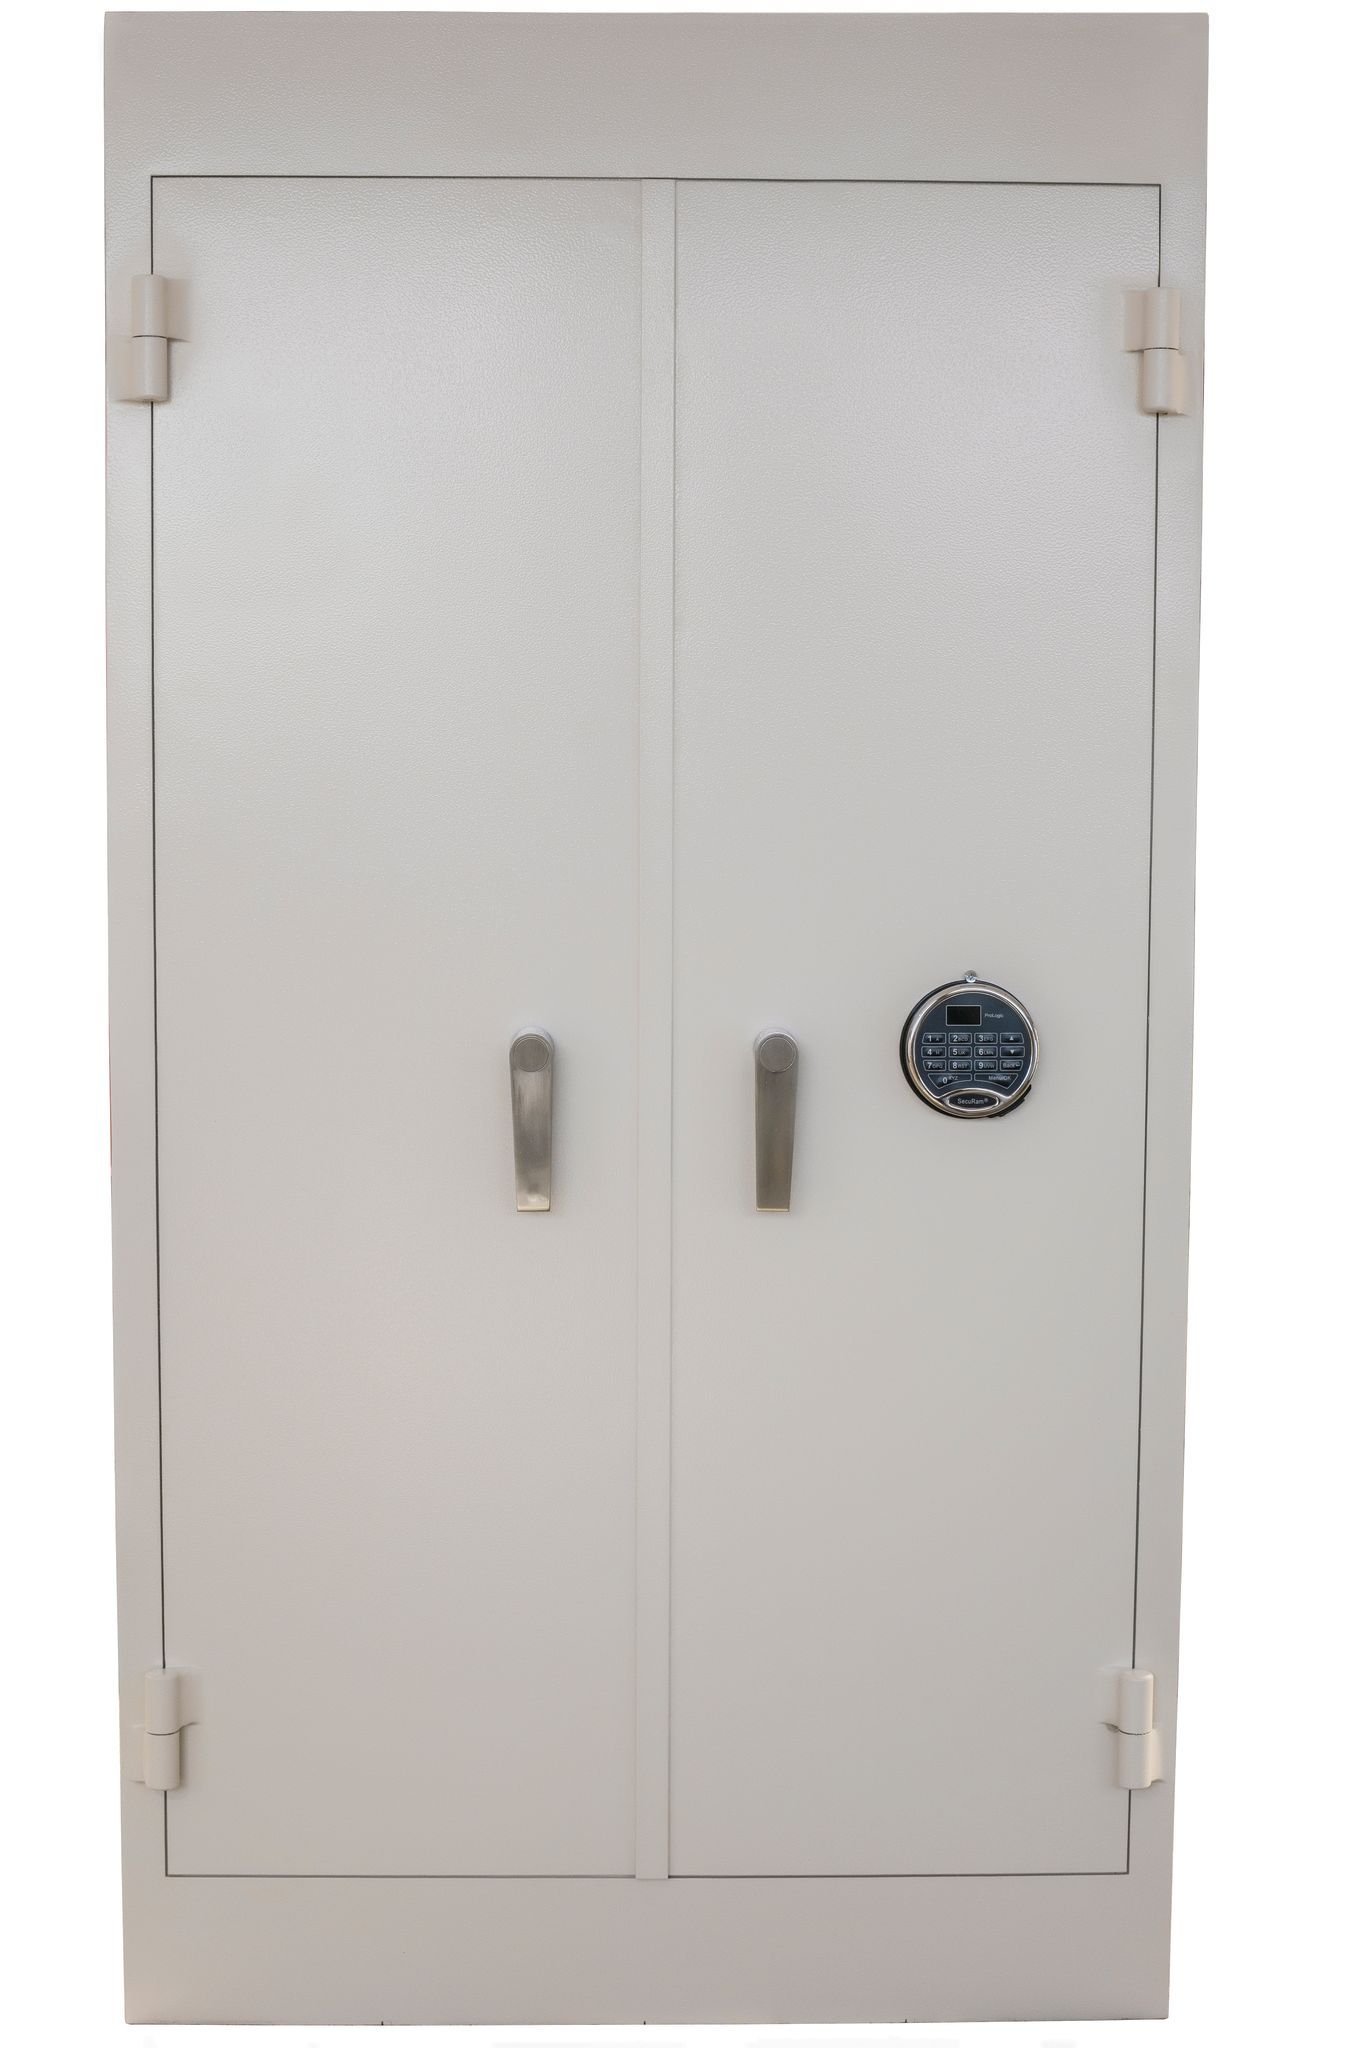 Cennox B6032-FK1 Double Door Pharmacy Safe